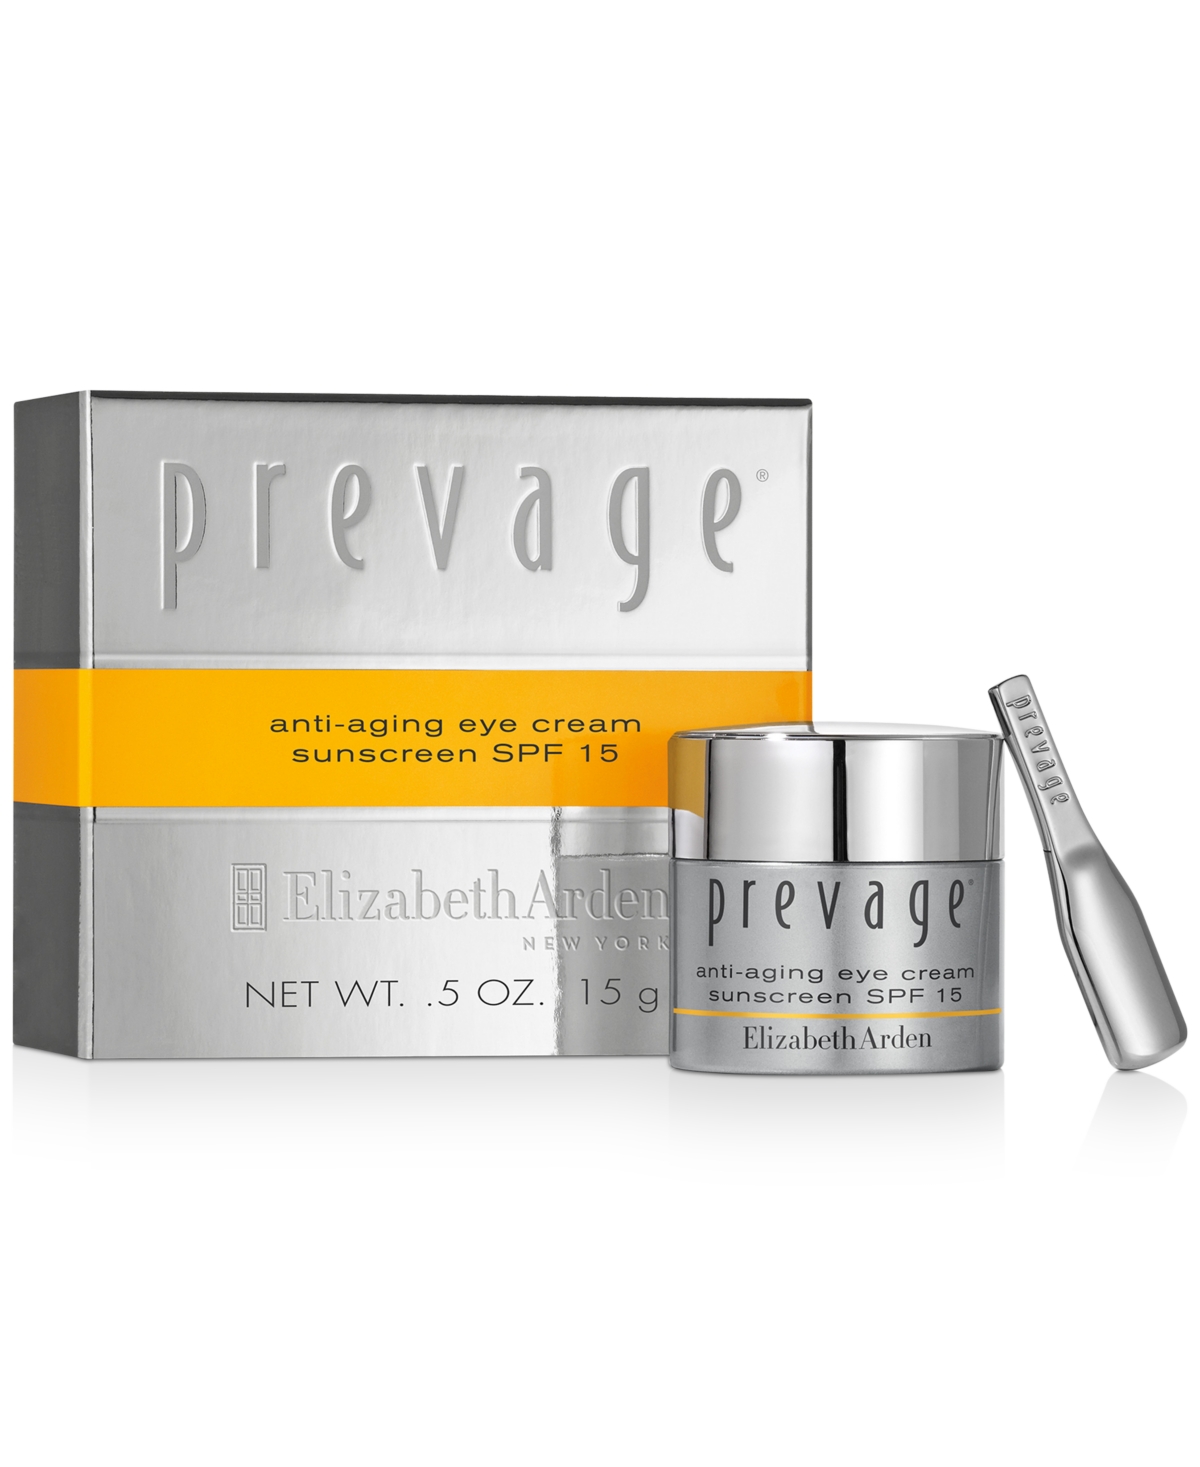 Prevage Anti-aging Eye Cream Sunscreen Spf 15, 0.5 fl. oz.